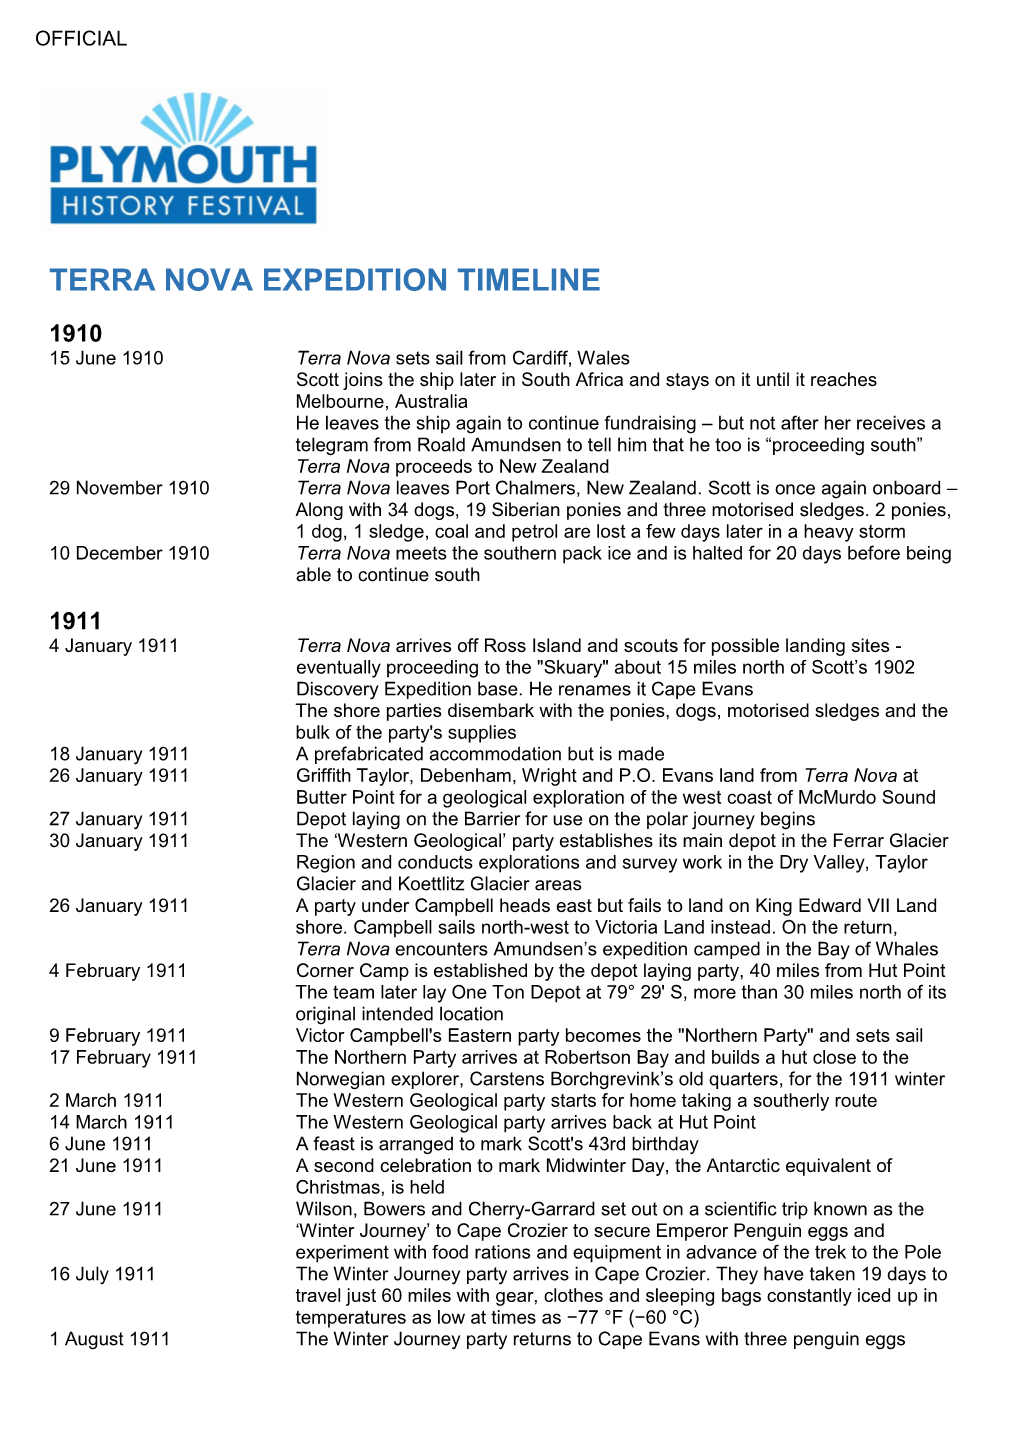 Terra Nova Expedition Timeline